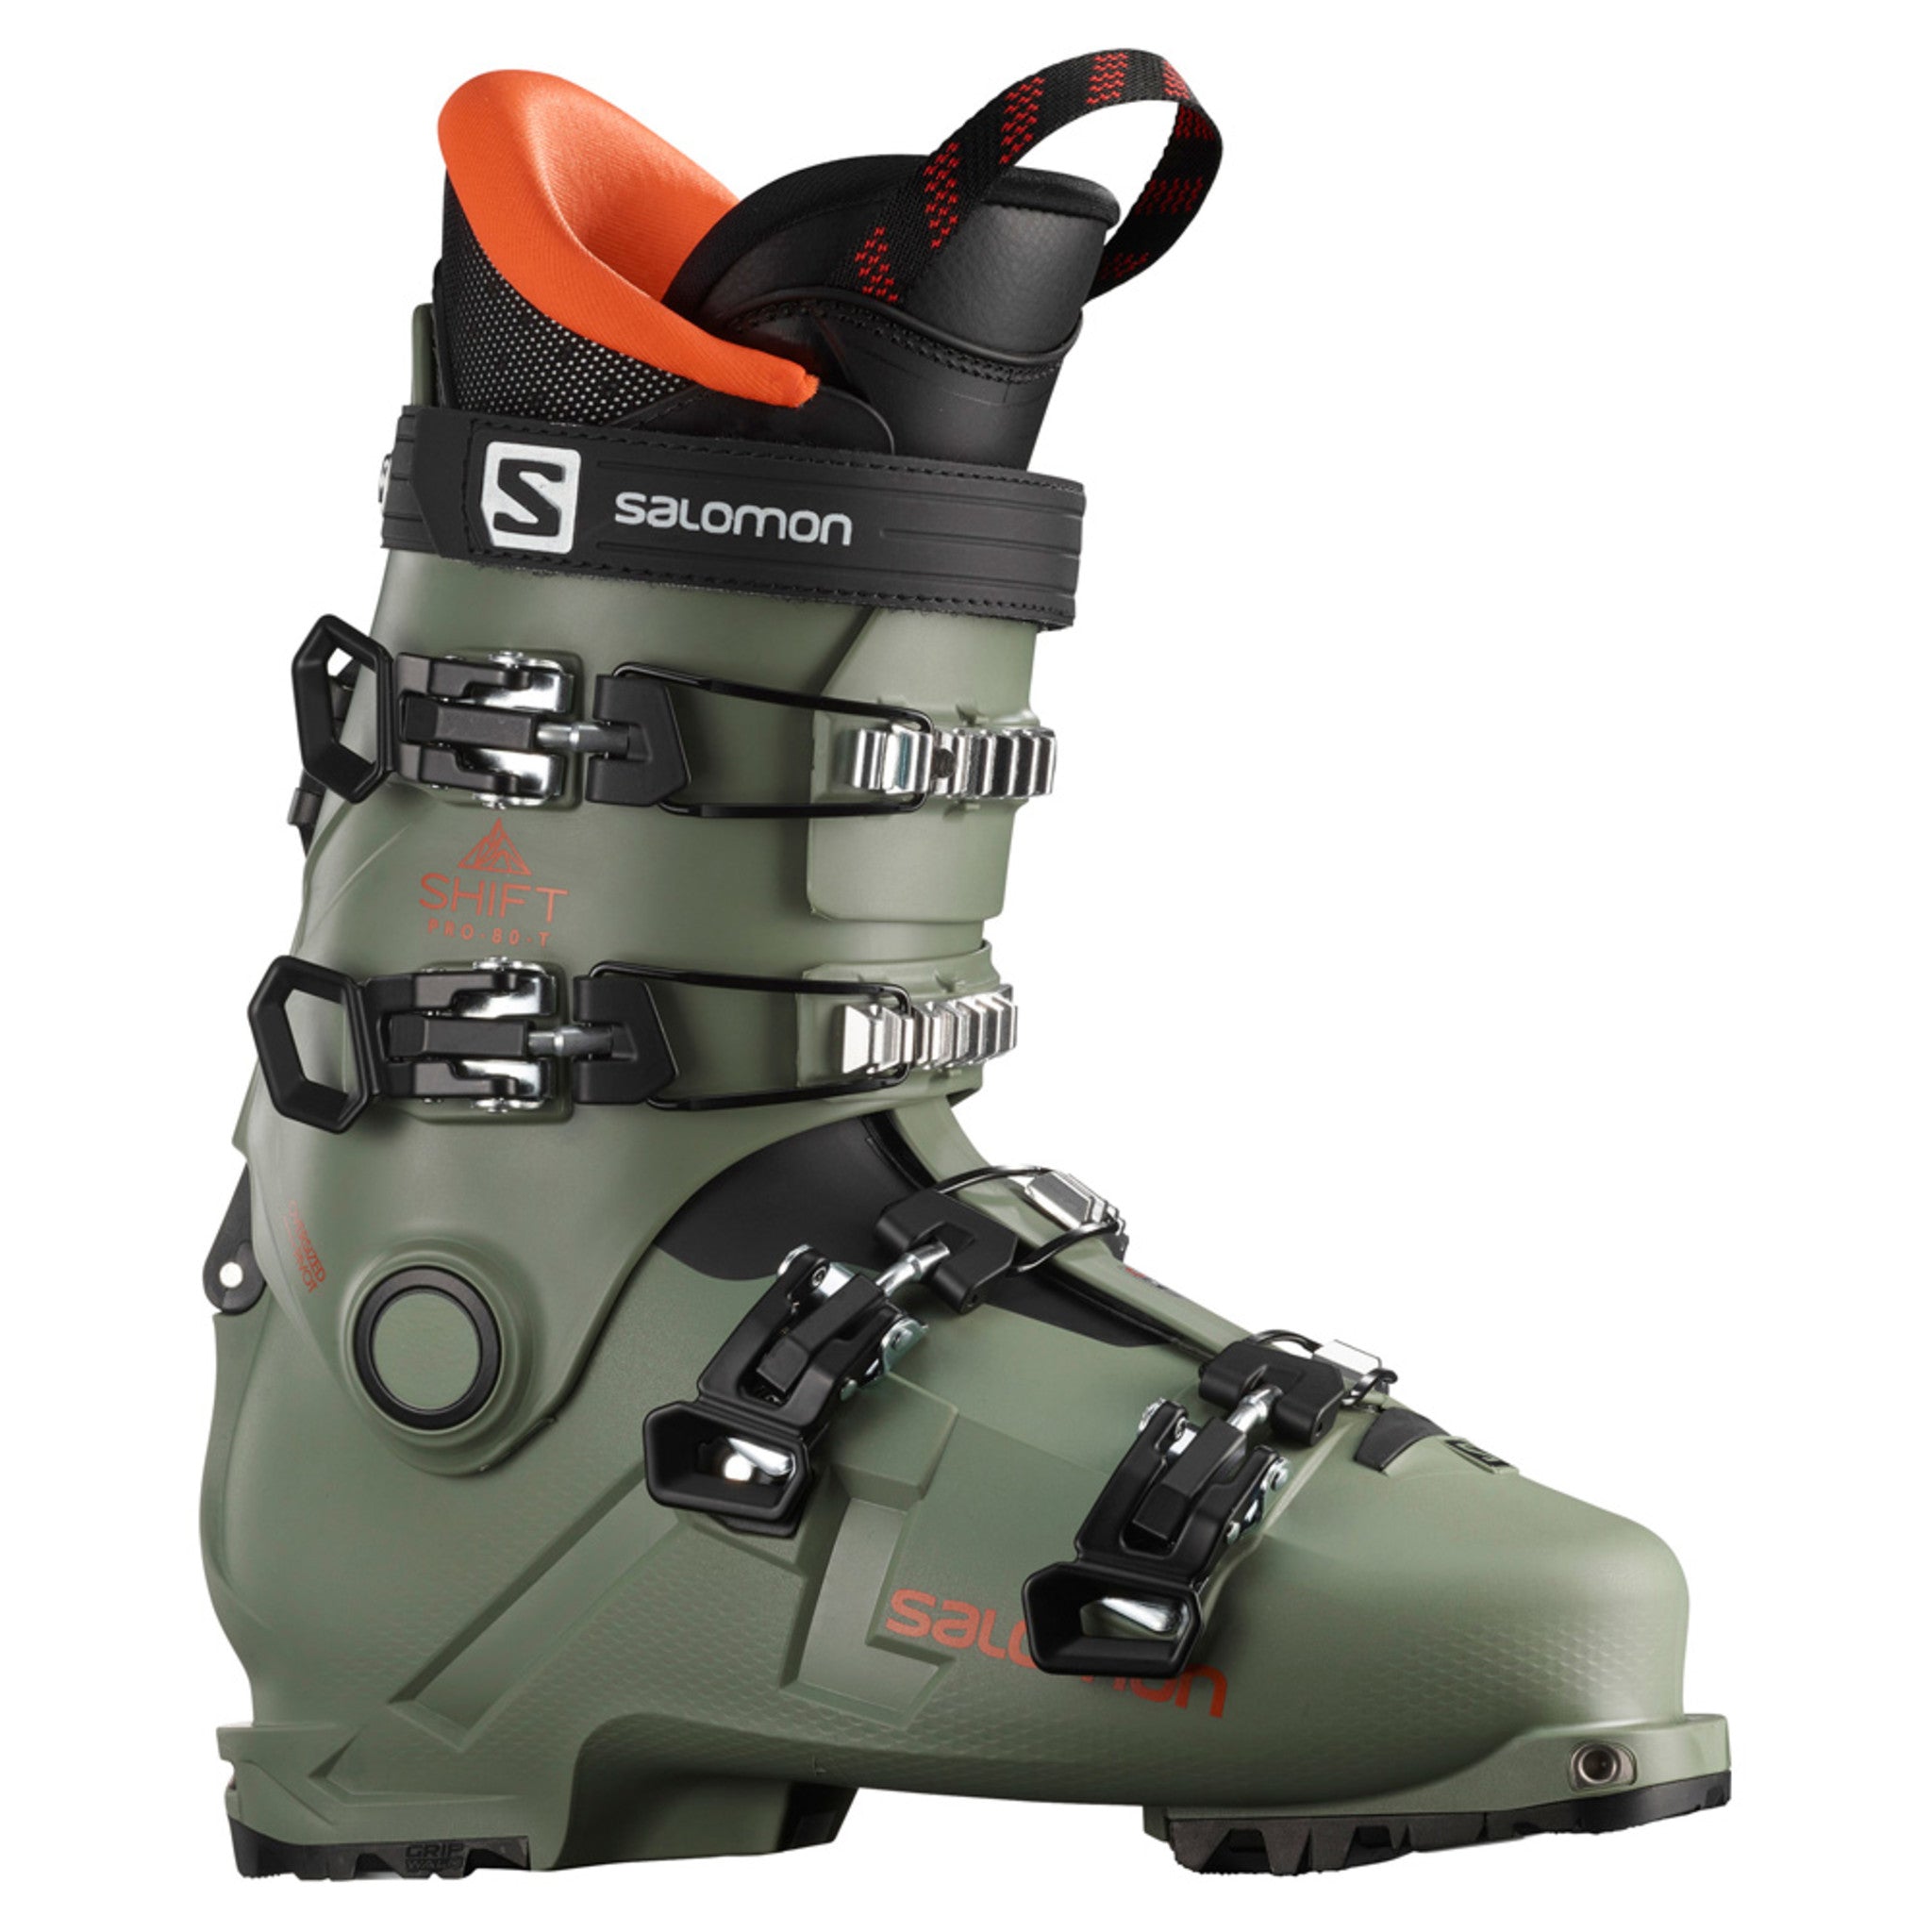 Lange XT3 80 W Alpine Touring Ski Boots - Women's 2022